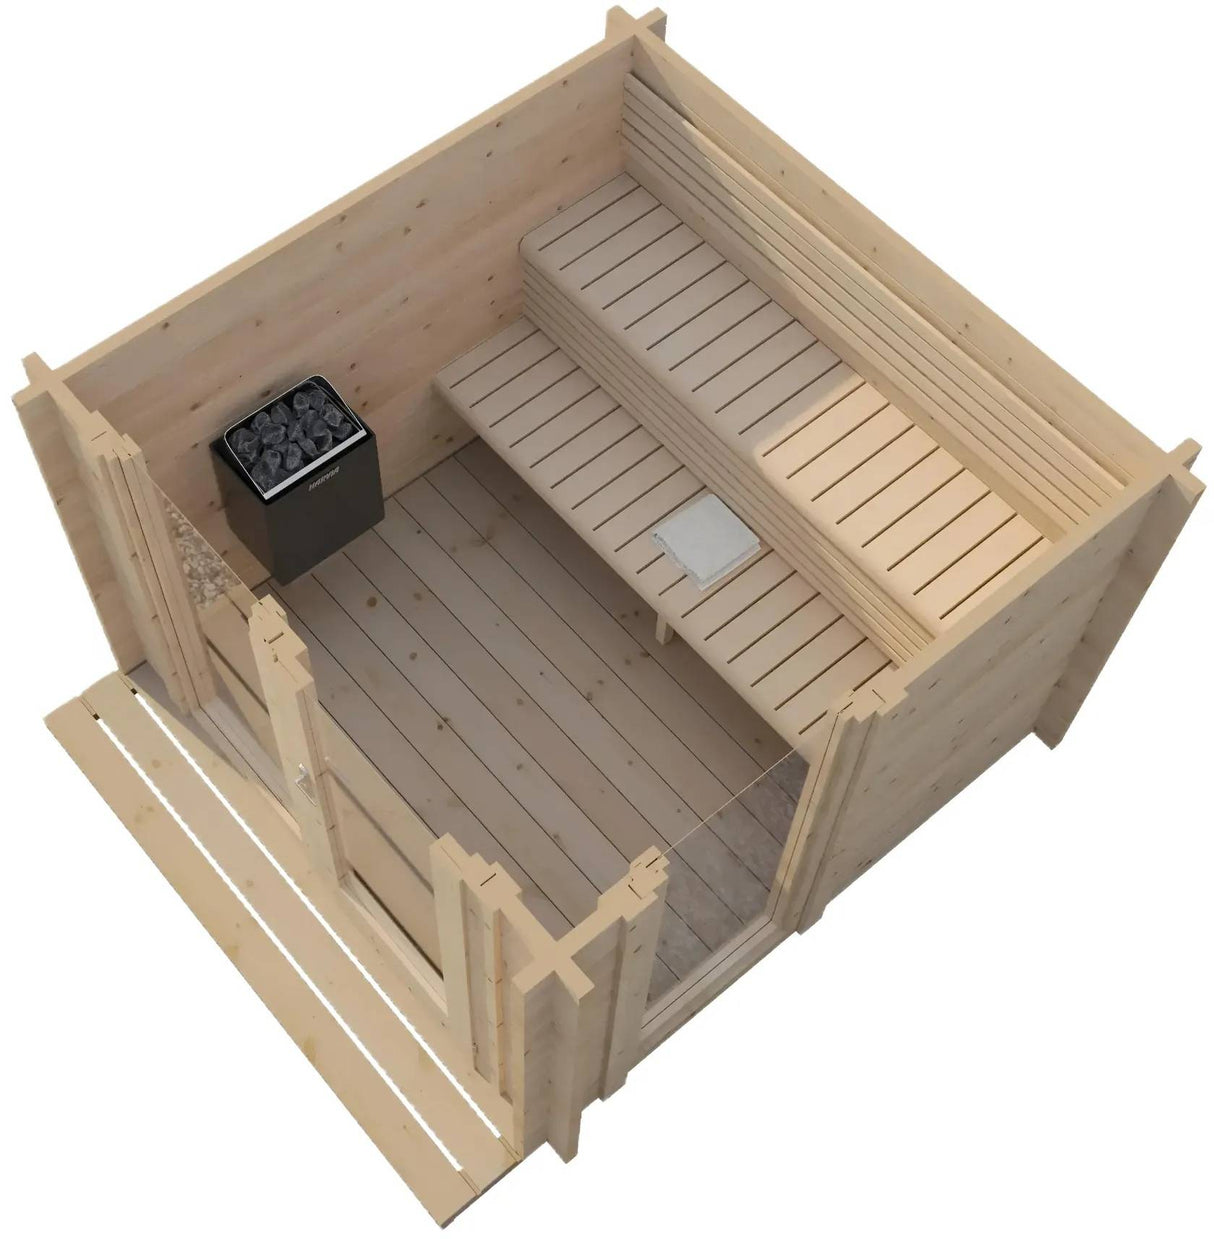 ZiahCare's SaunaLife Model G4 Outdoor Home Sauna Kit Mockup Image 3